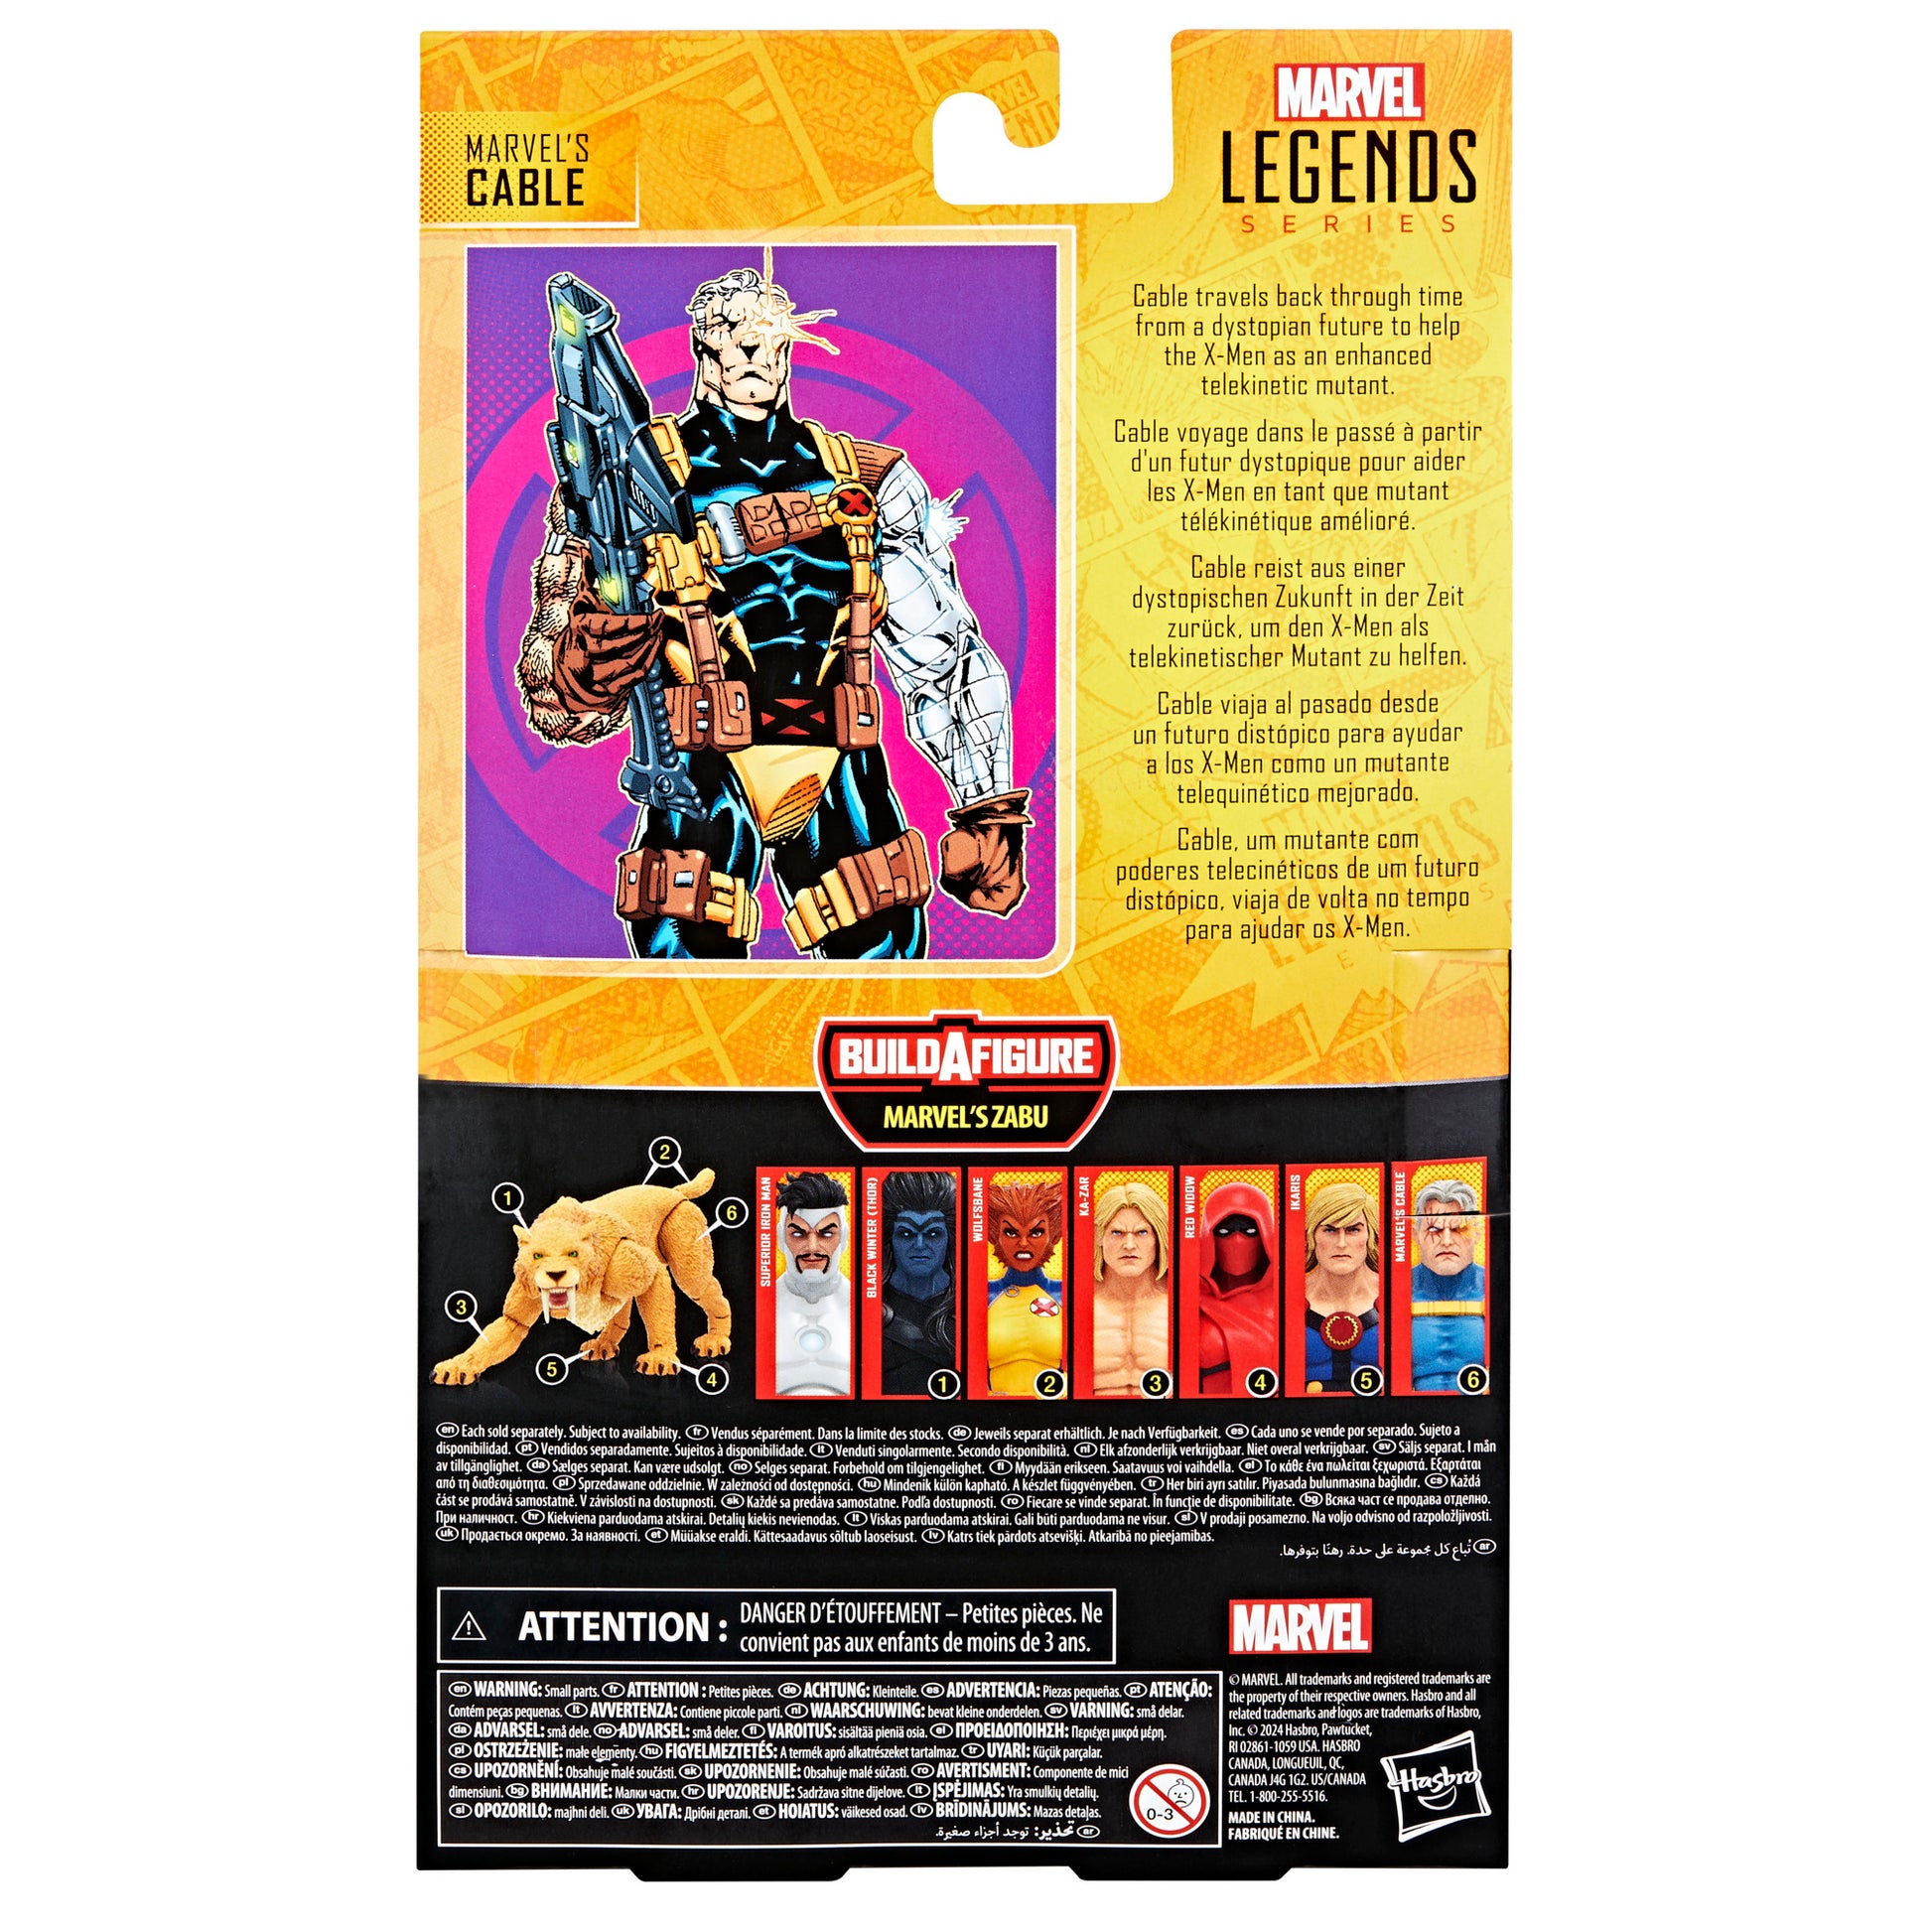 Marvel Legends Series Marvel Comics Marvel's Cable Action Figure Toy